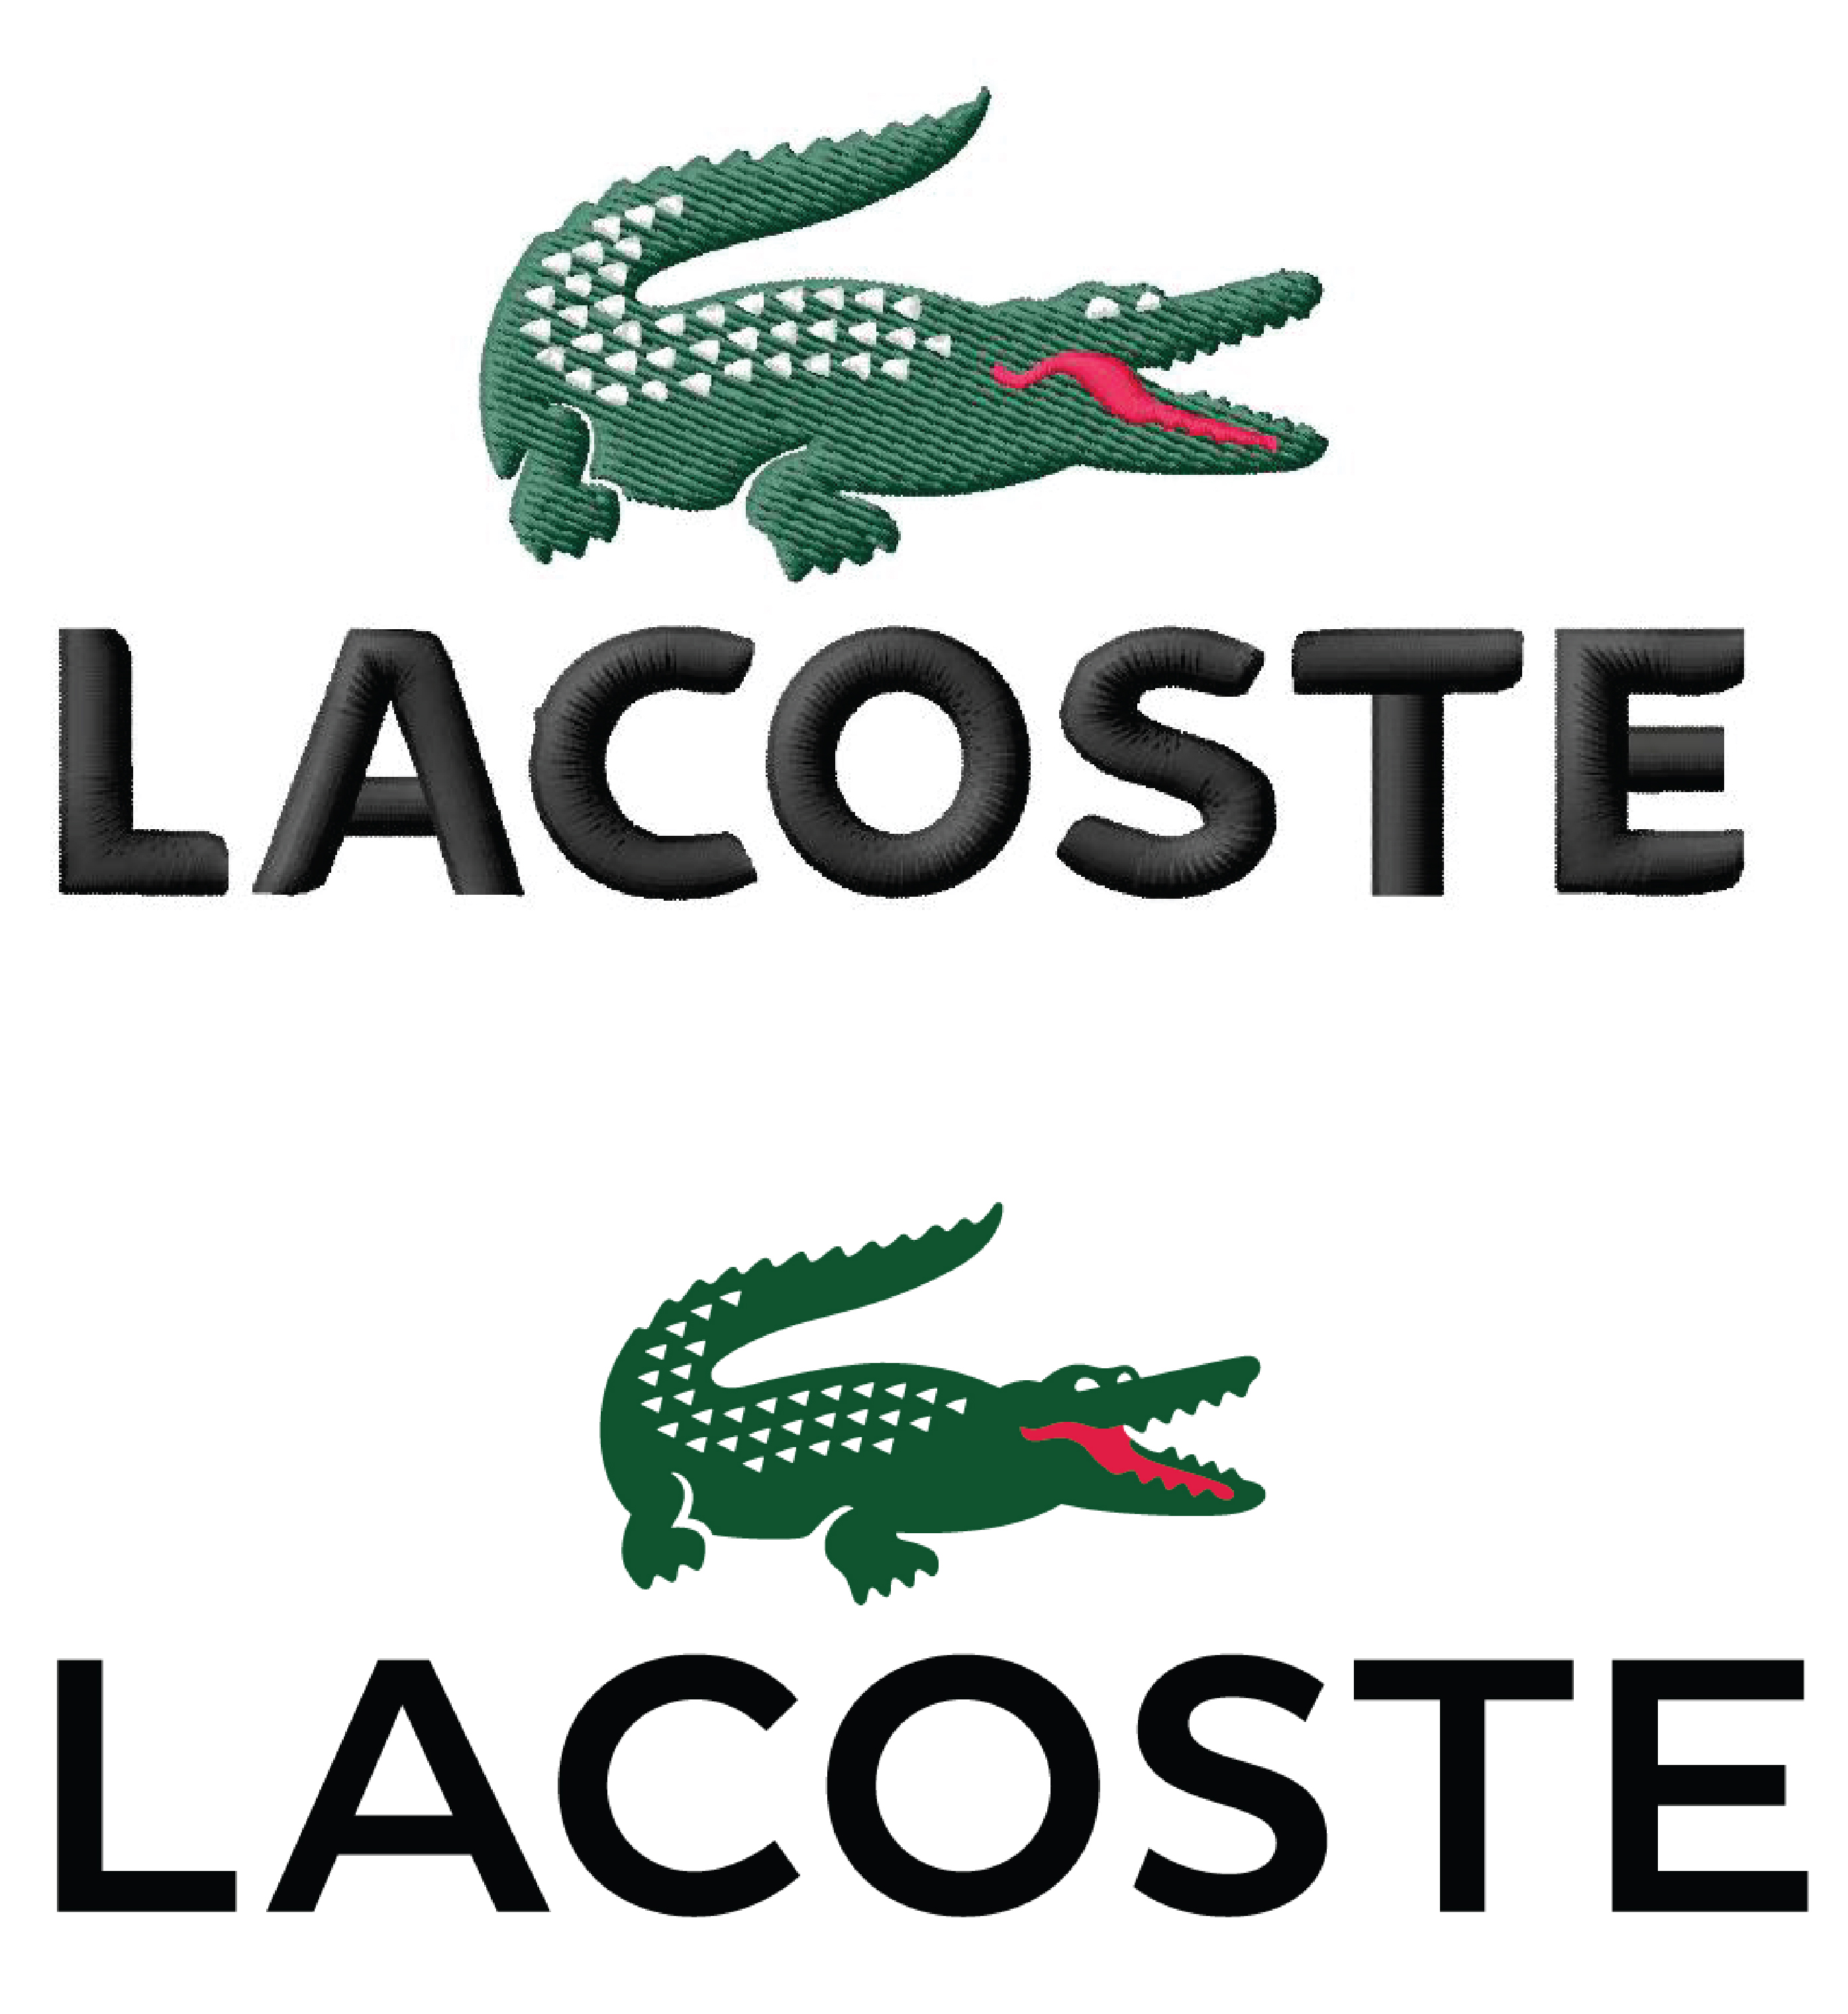 lacoste crocodile logo